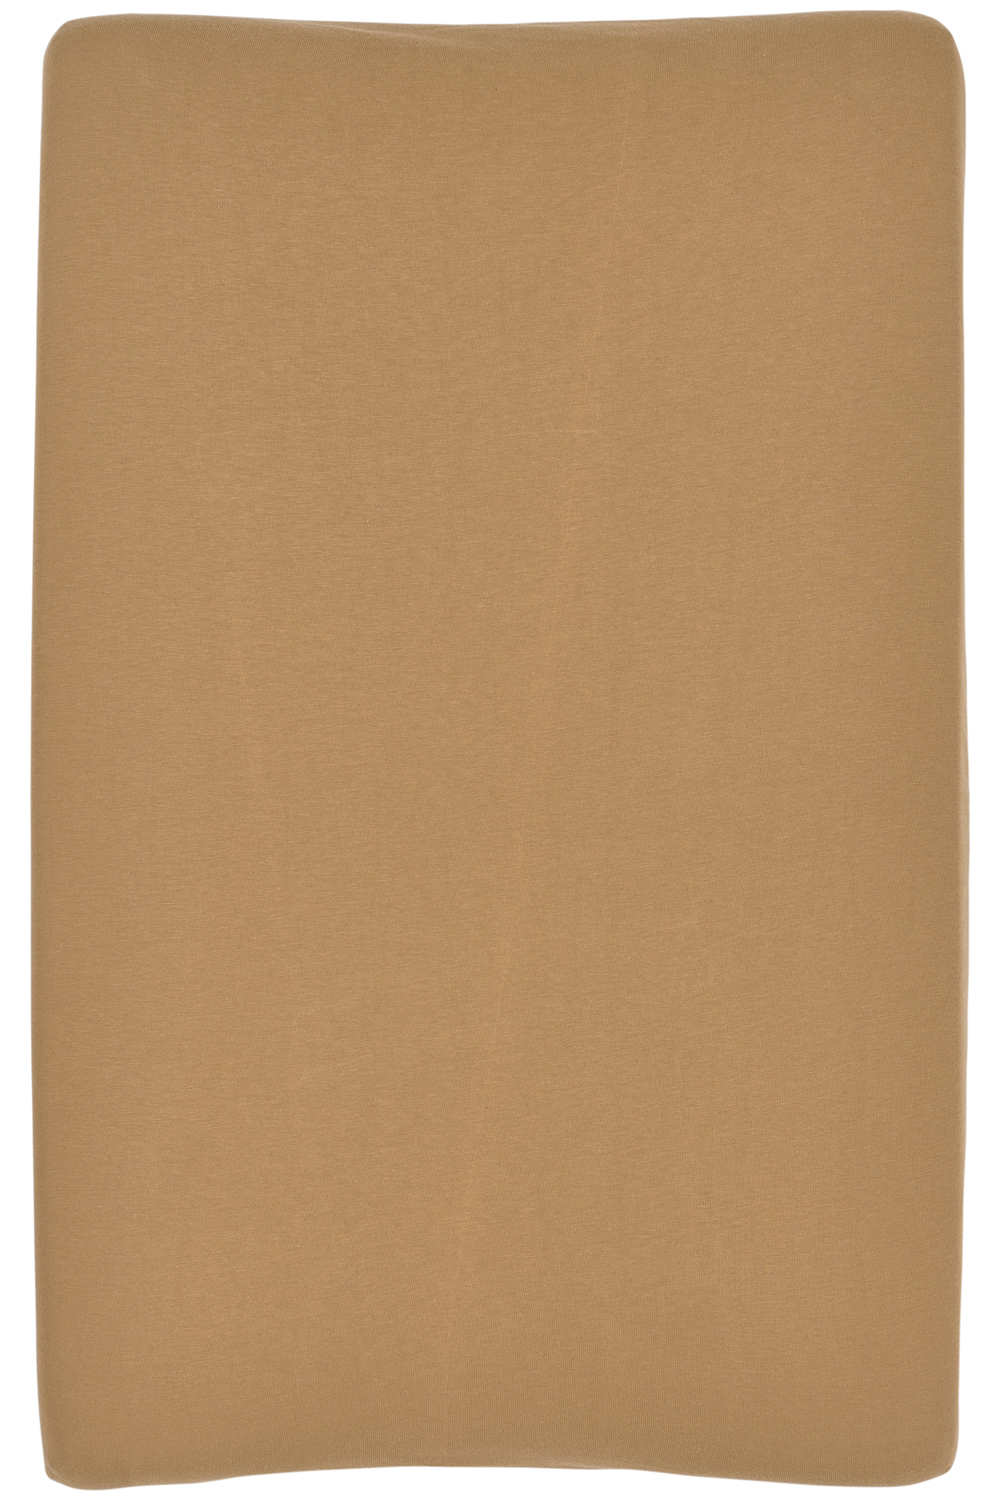 Aankleedkussenhoes Uni - toffee - 50x70cm